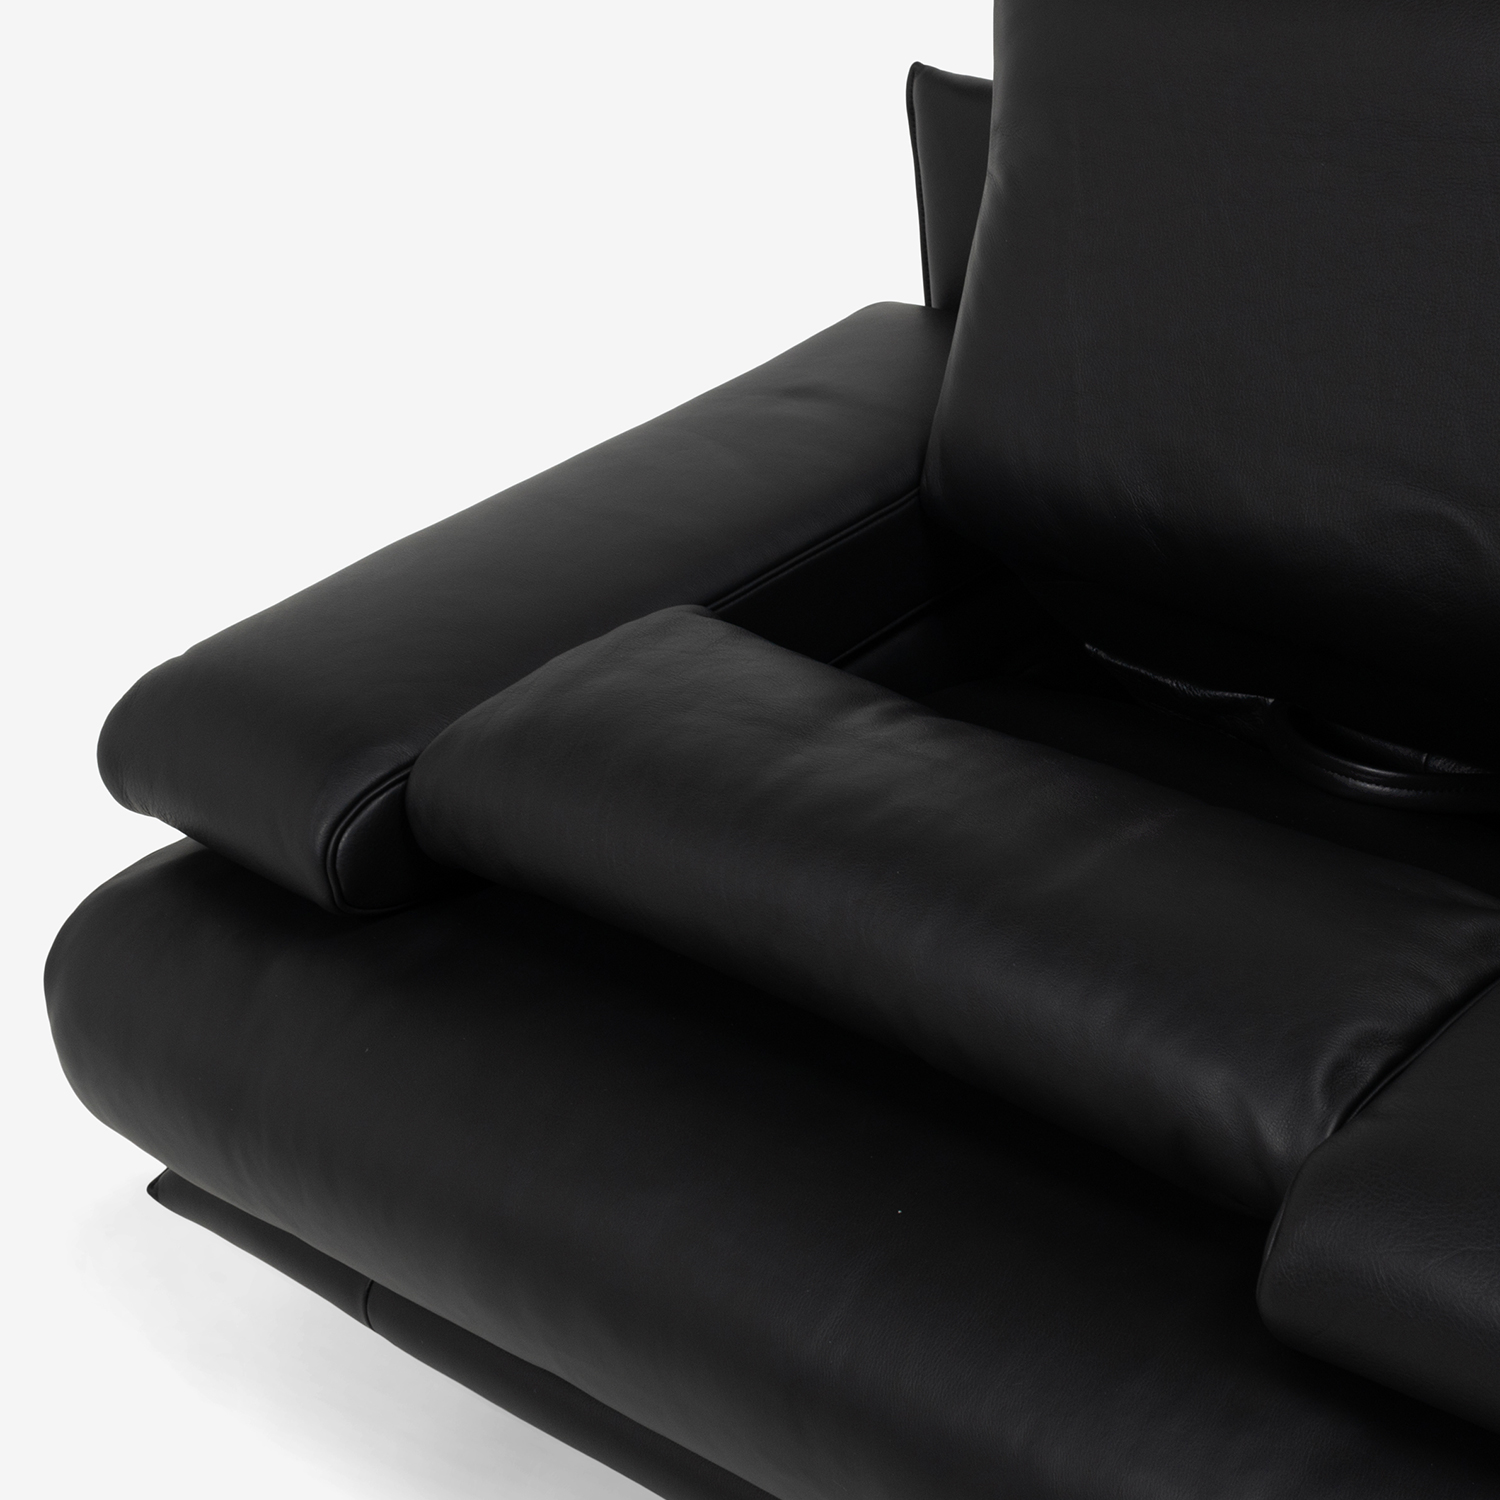 ROLF BENZ（ロルフベンツ）アームチェア 「6500」 革ブラック色【決算セールのため40%OFF】